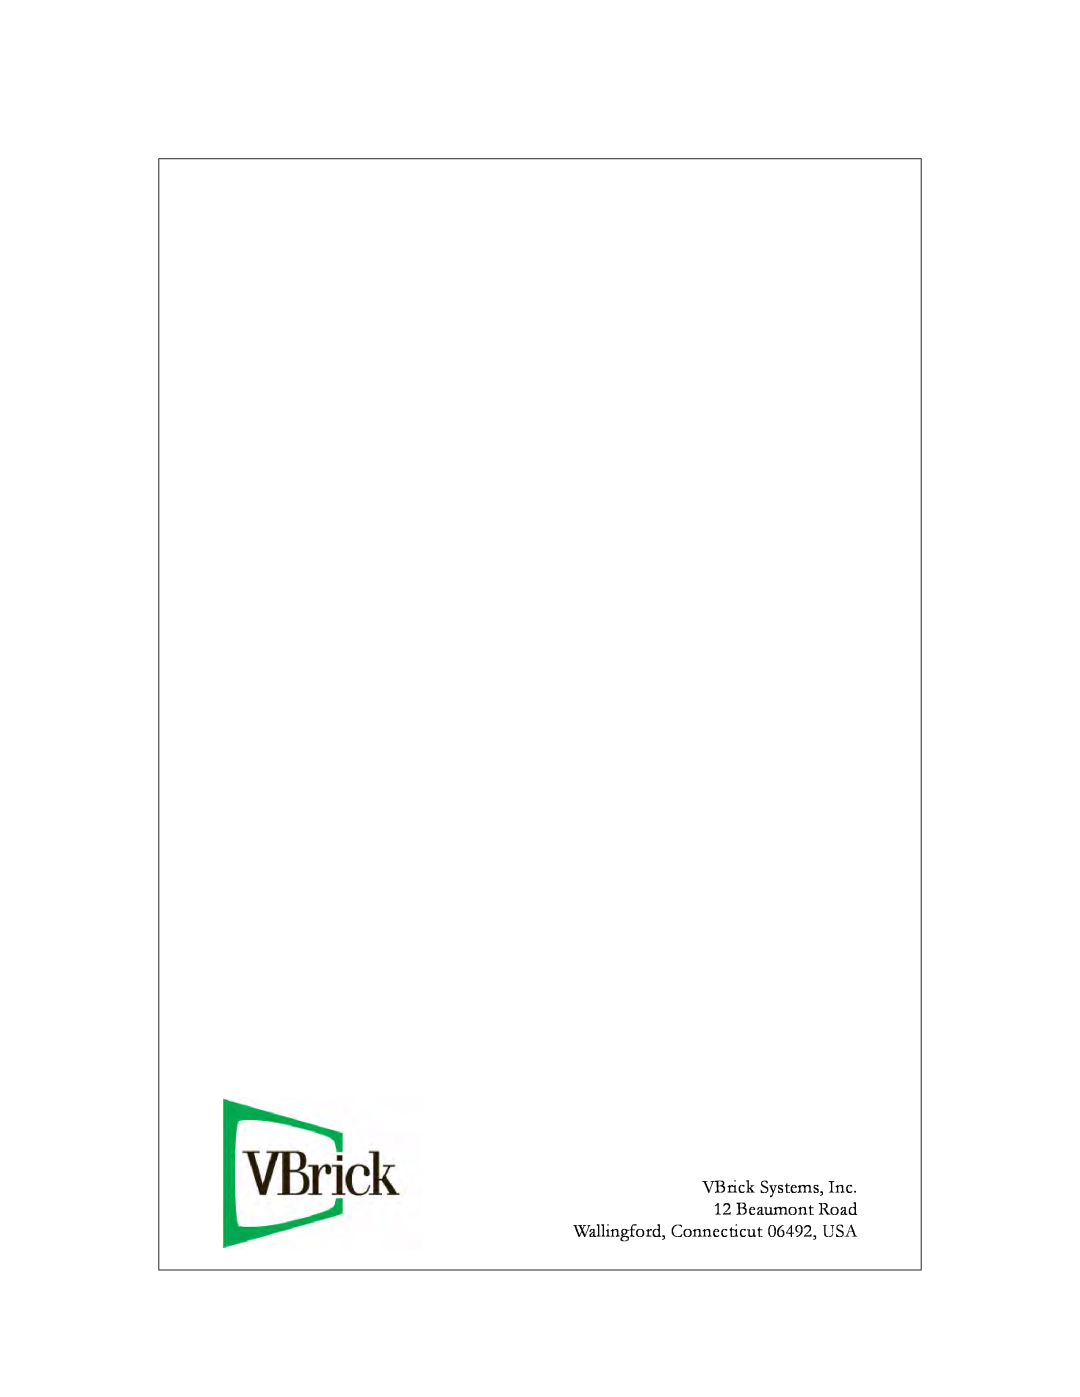 VBrick Systems VB5000, VB6000, VB4000 manual VBrick Systems, Inc 12 Beaumont Road, Wallingford, Connecticut 06492, USA 